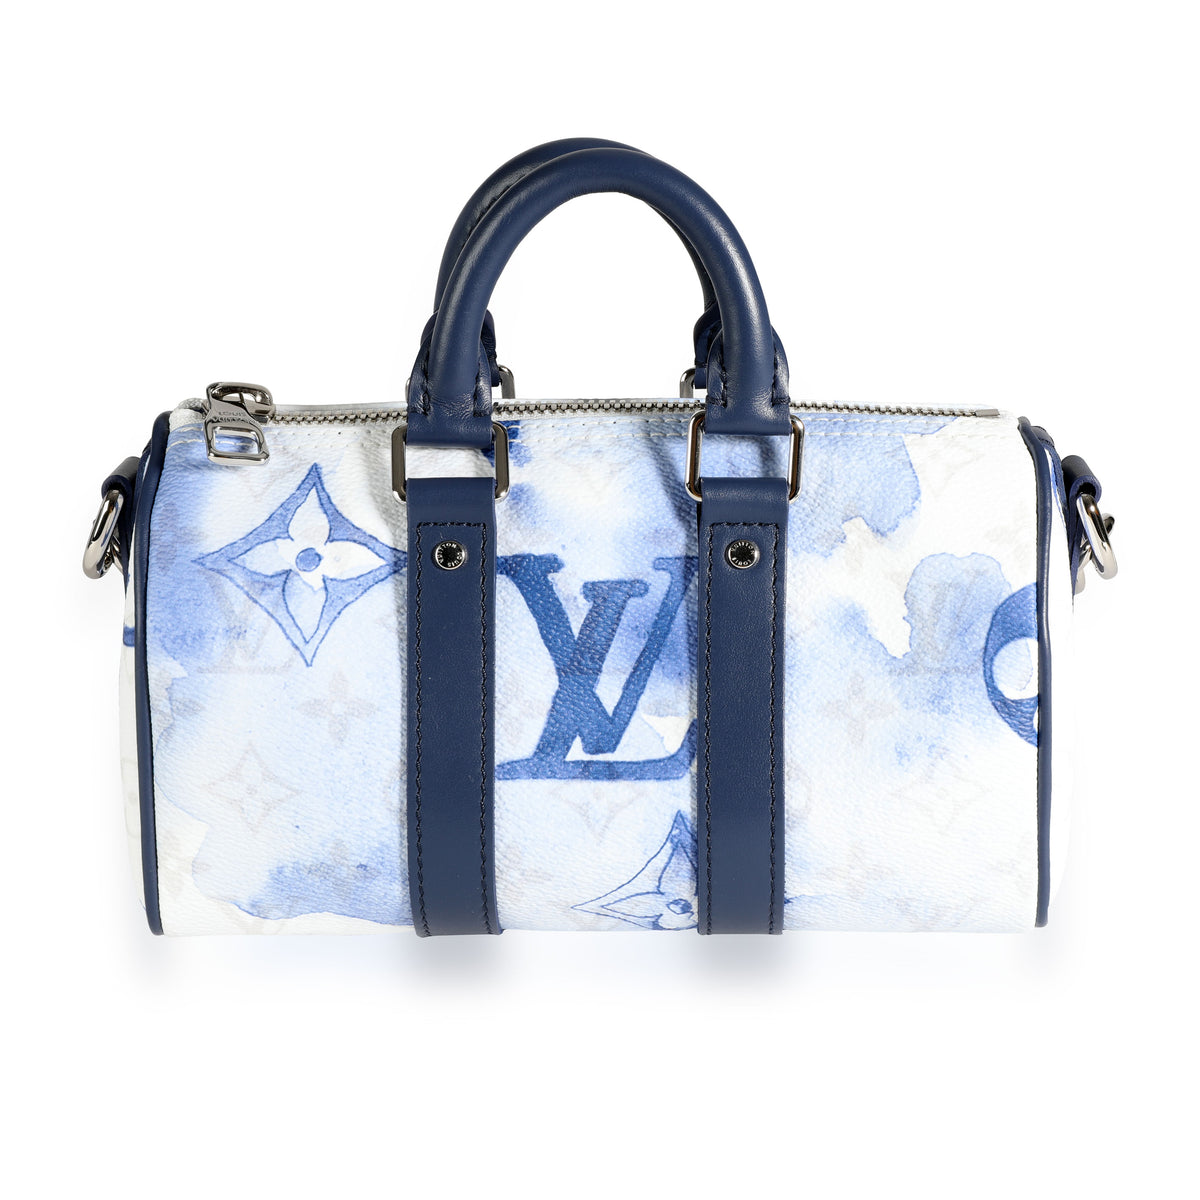 LOUIS VUITTON KEEPALL BAG REVIEW 2021 - Louis Vuitton Travel Bag Review -  Louis Vuitton Holdall 